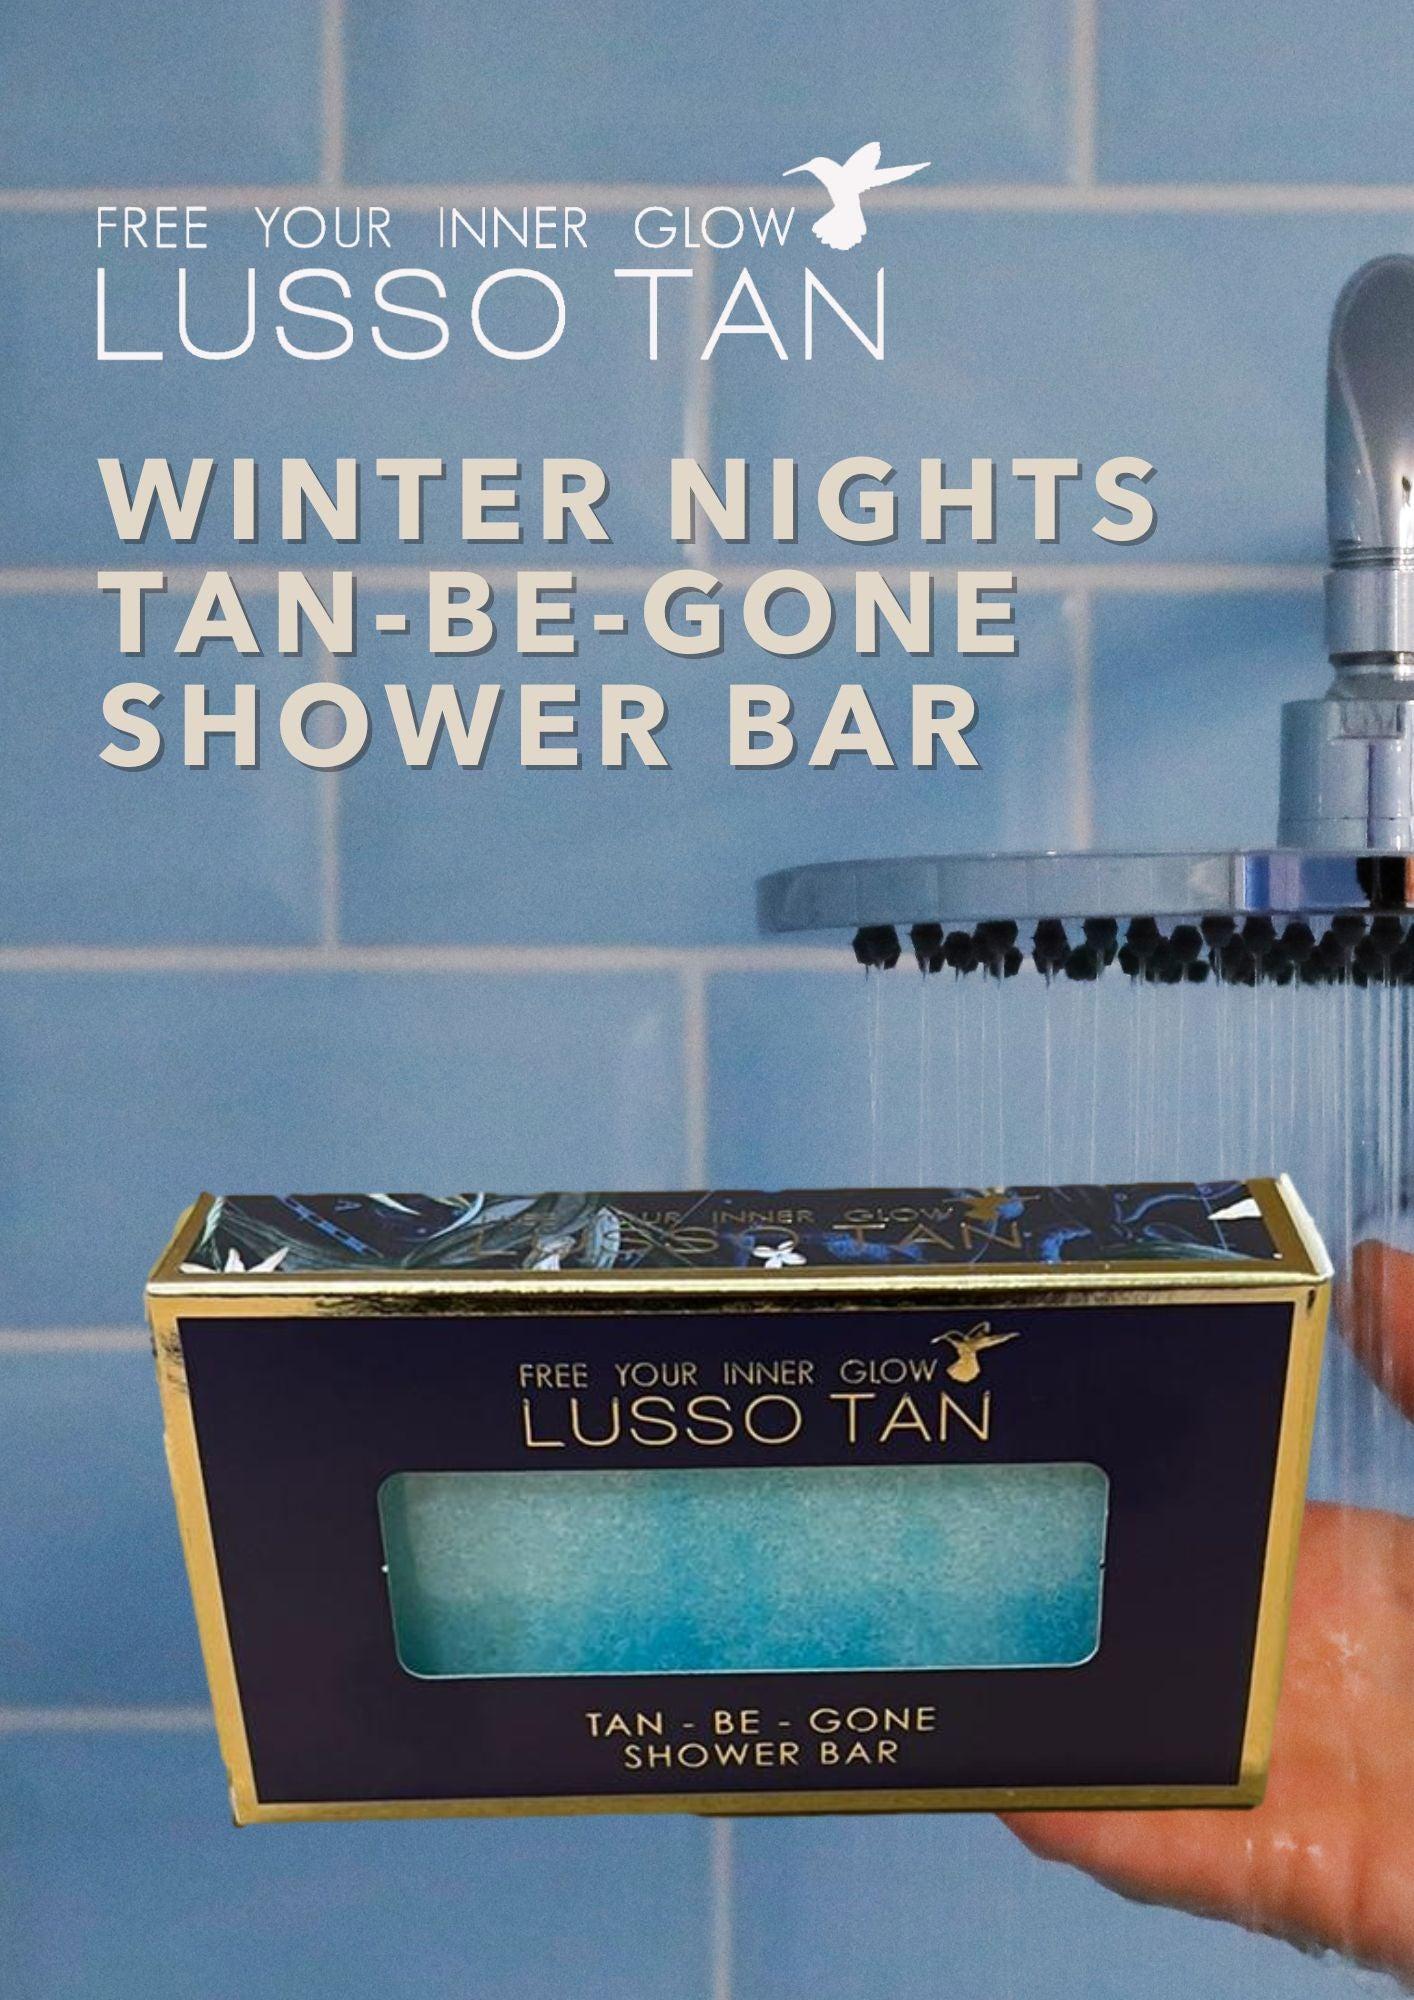 Lusso Tan Tan-Be-Gone Shower Bar Winter Nights